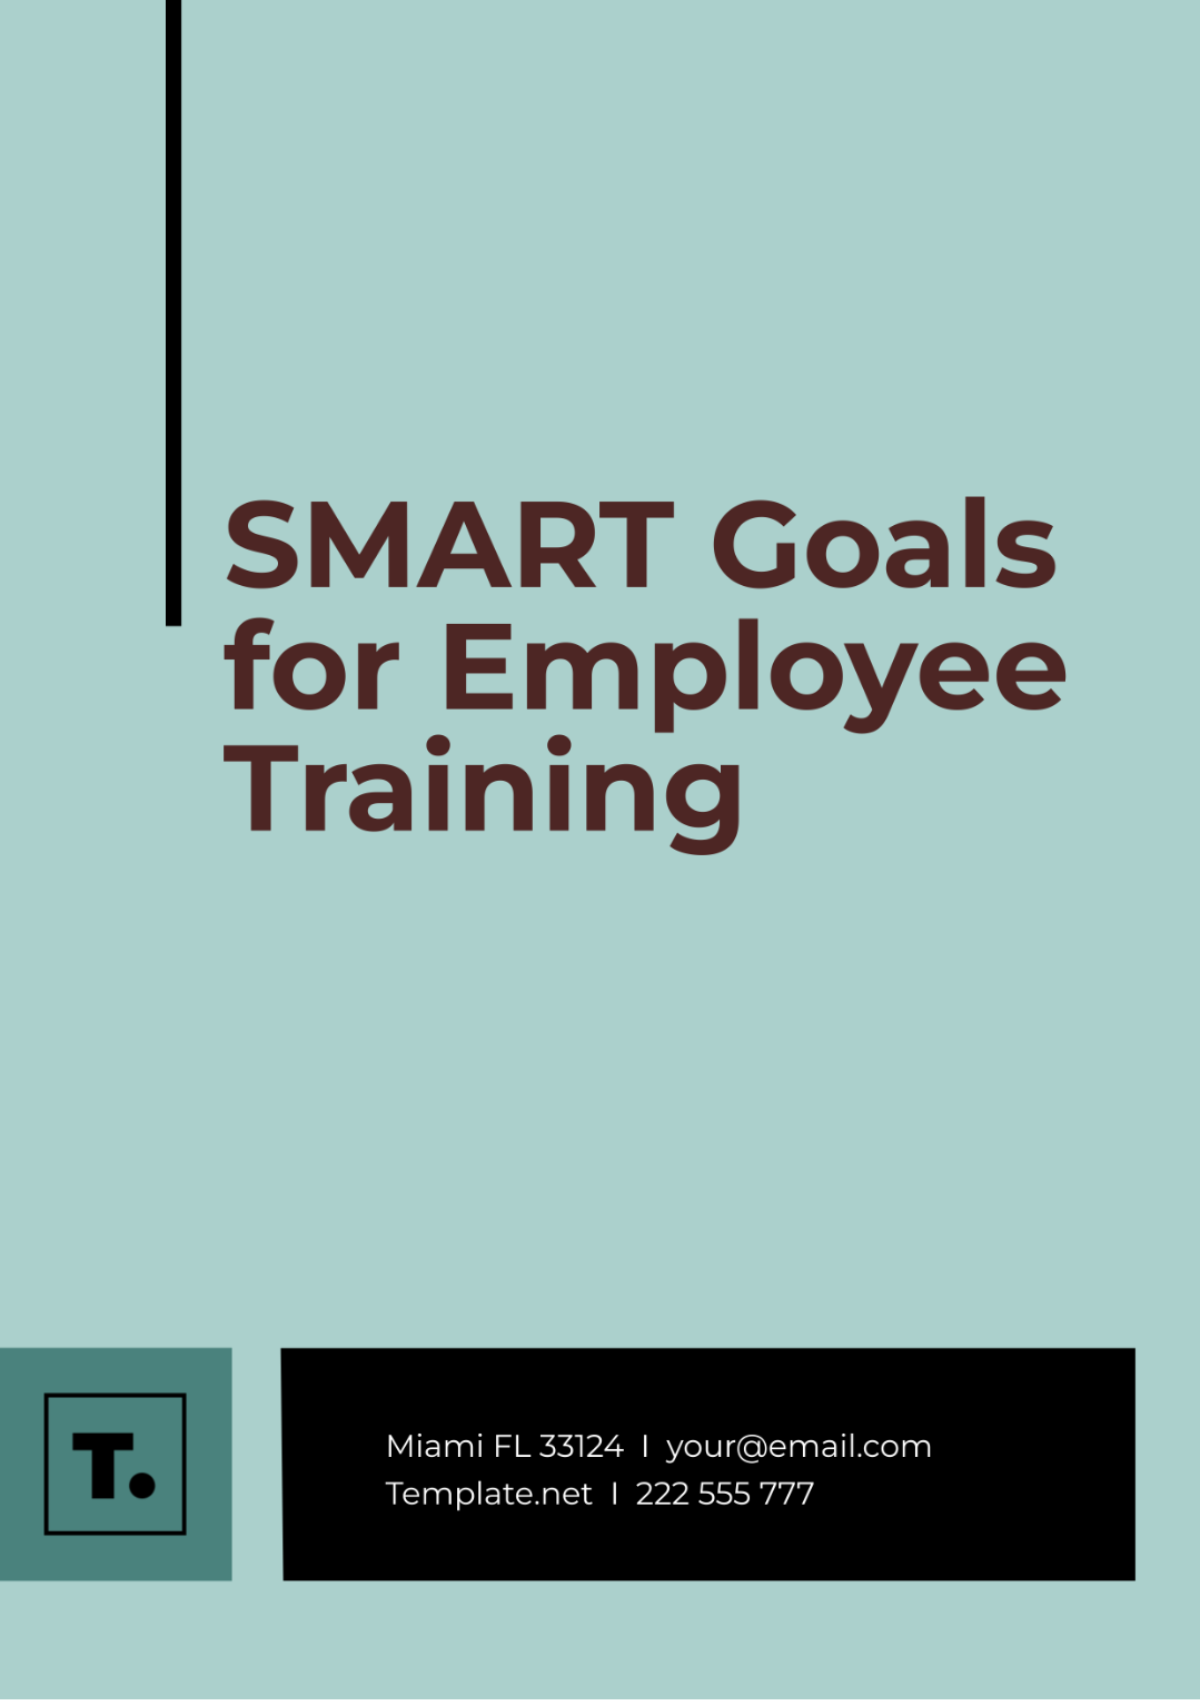 SMART Goals Template for Employee Training